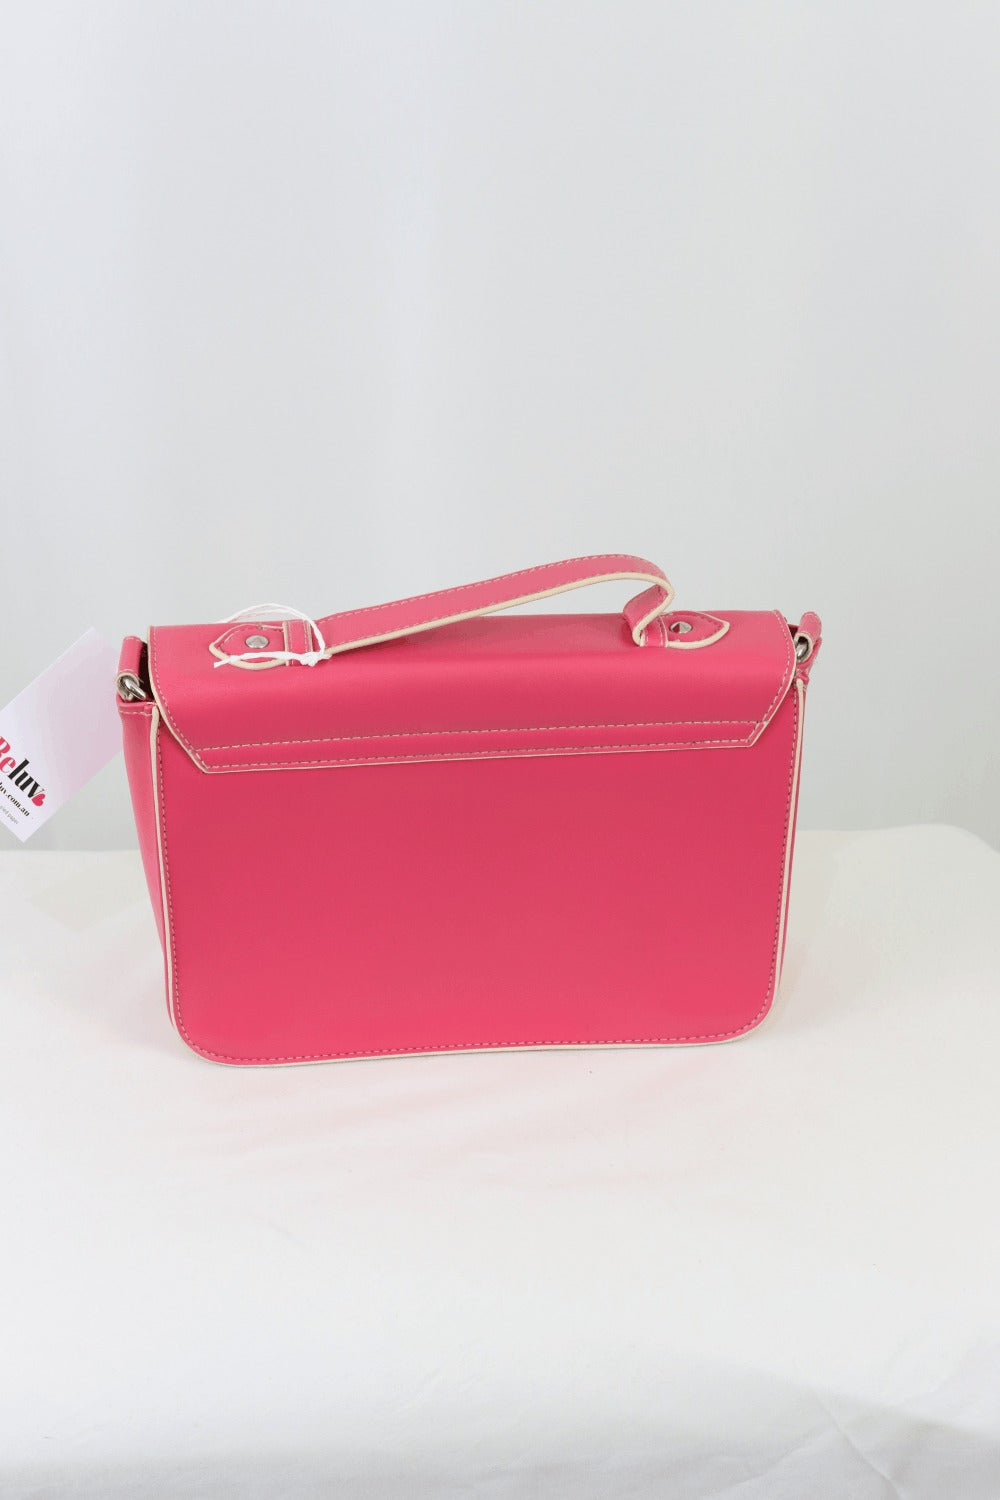 Topshop Pink Suitcase Bag